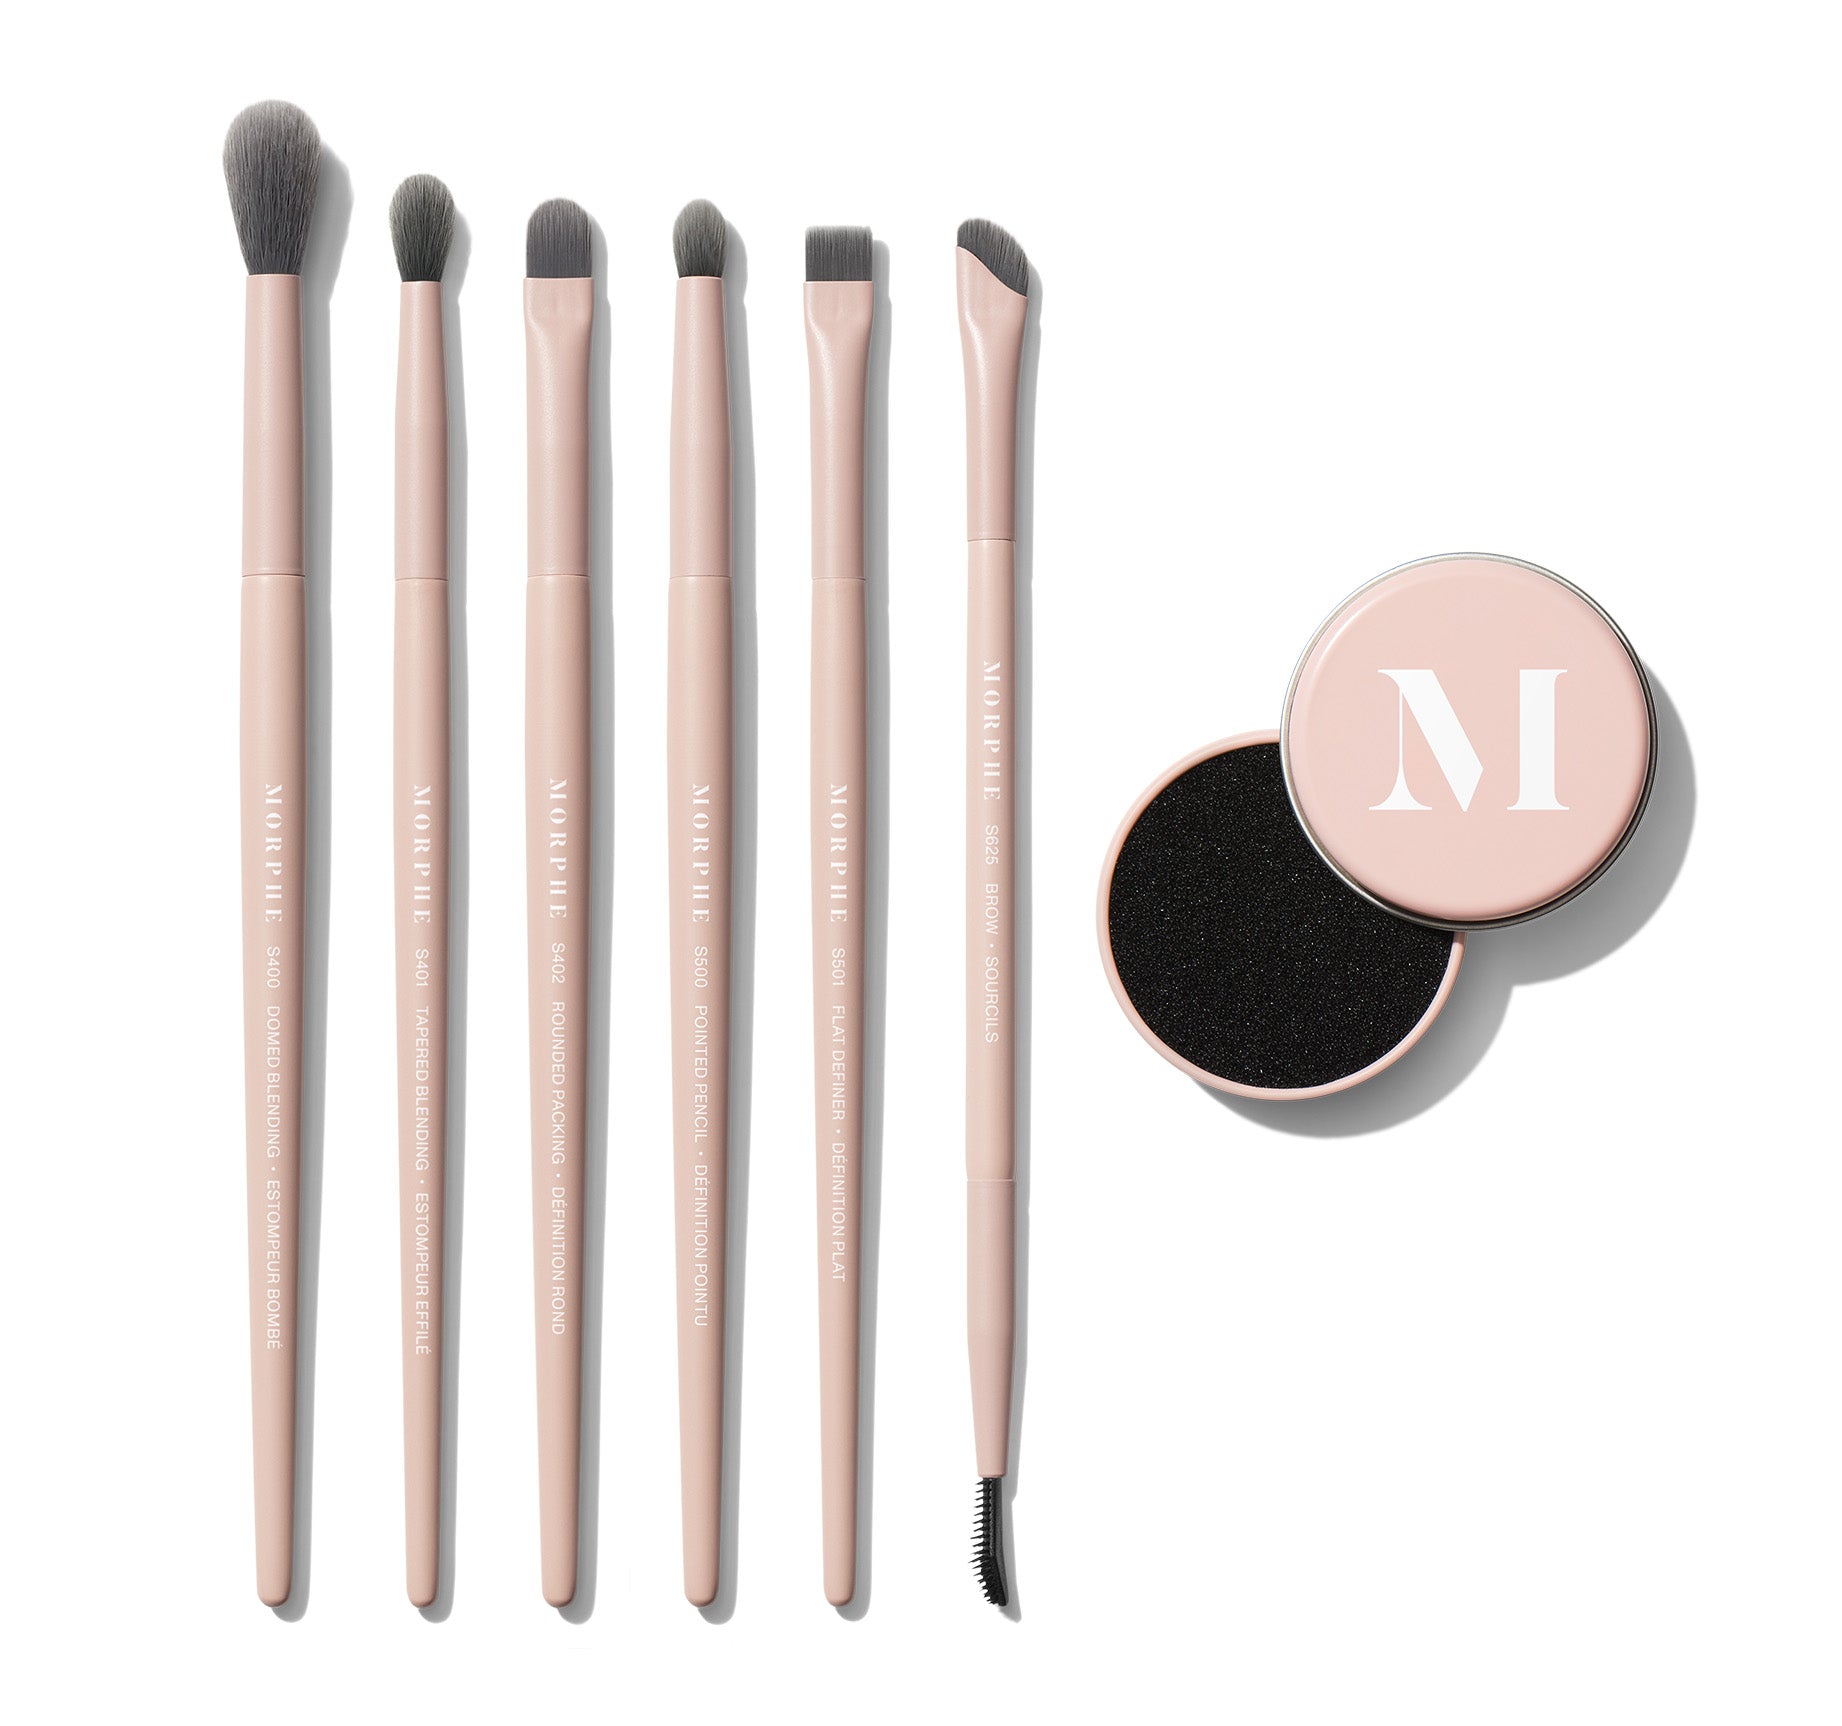 Eye Shaping Essentials Bamboo & Charcoal Infused Eye Brush Set - Image 1